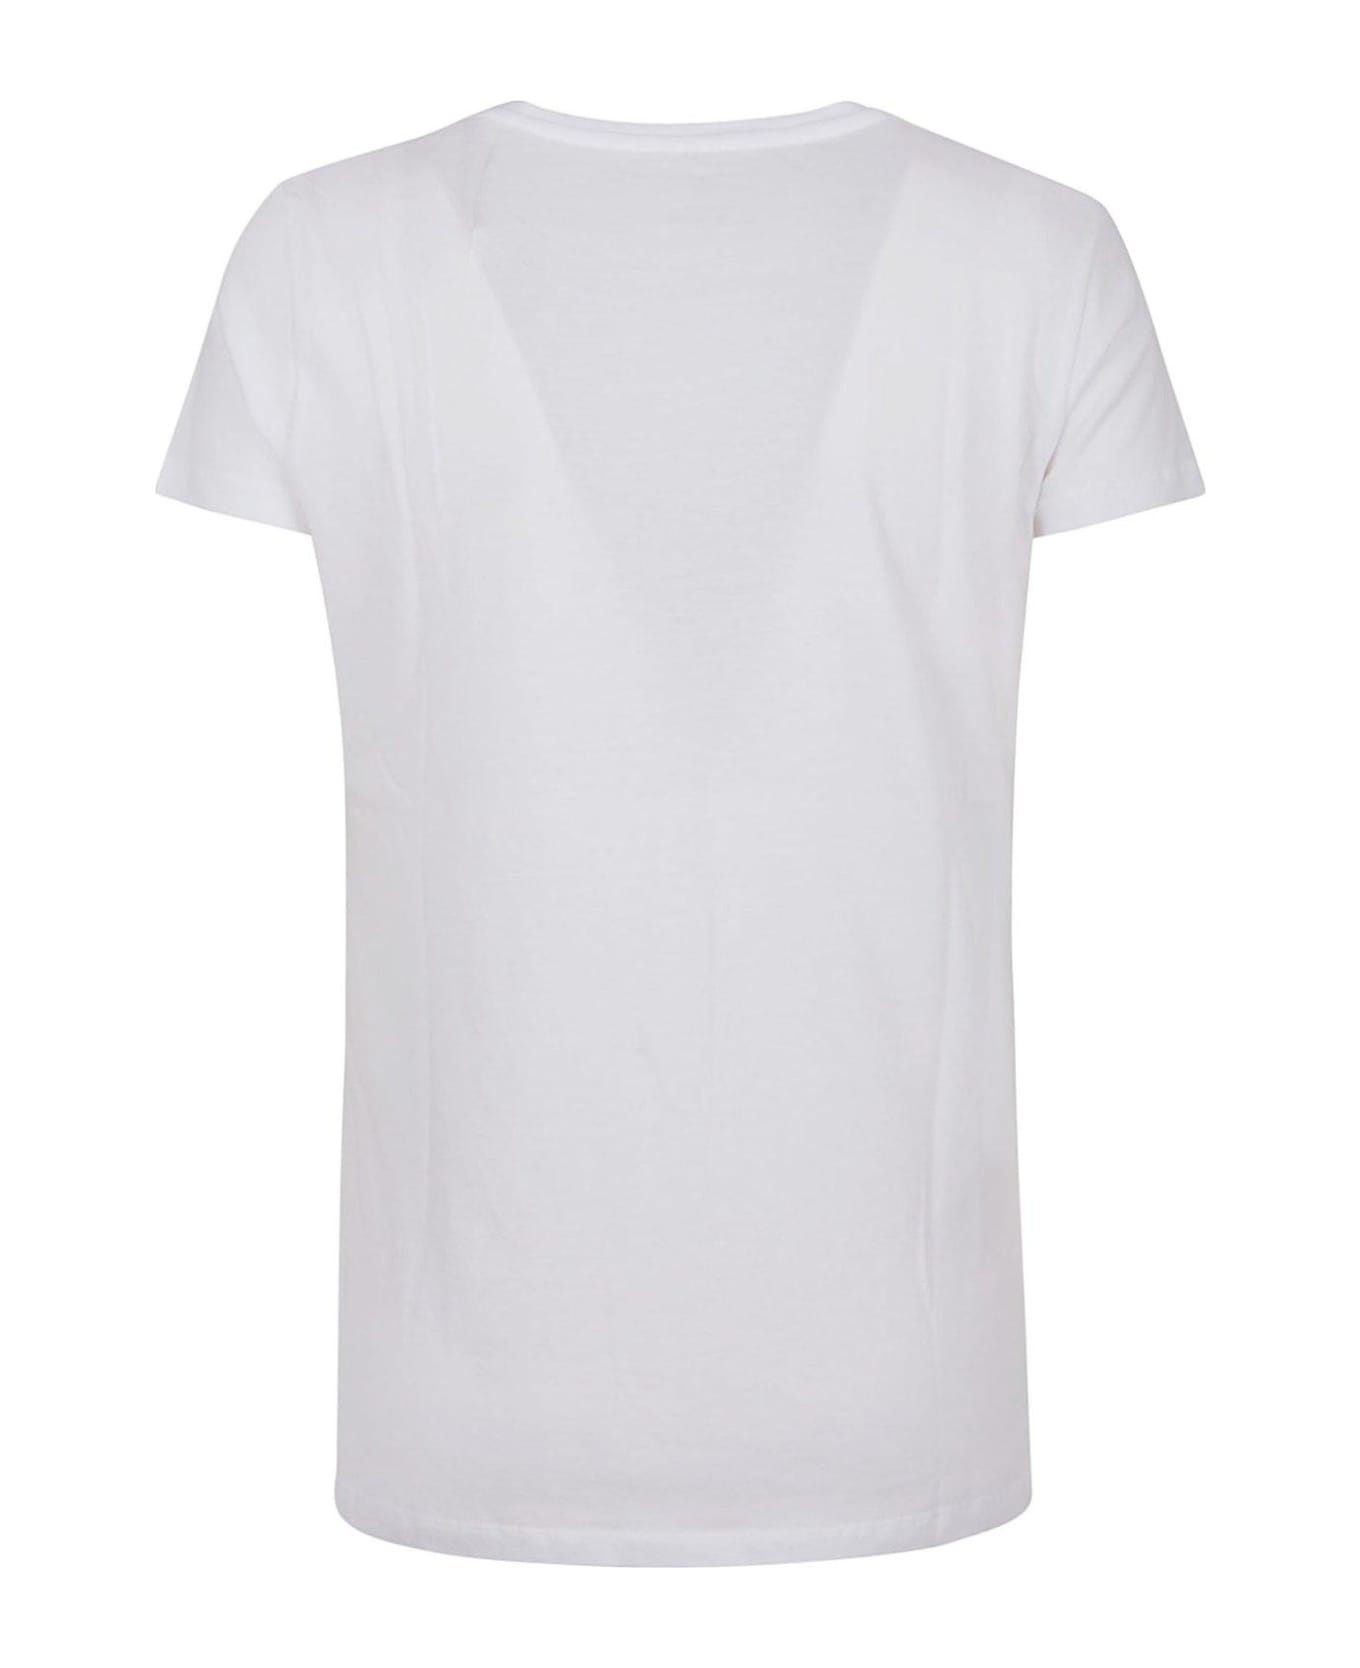 Majestic Filatures Round-neck Slim Fit T-shirt - White